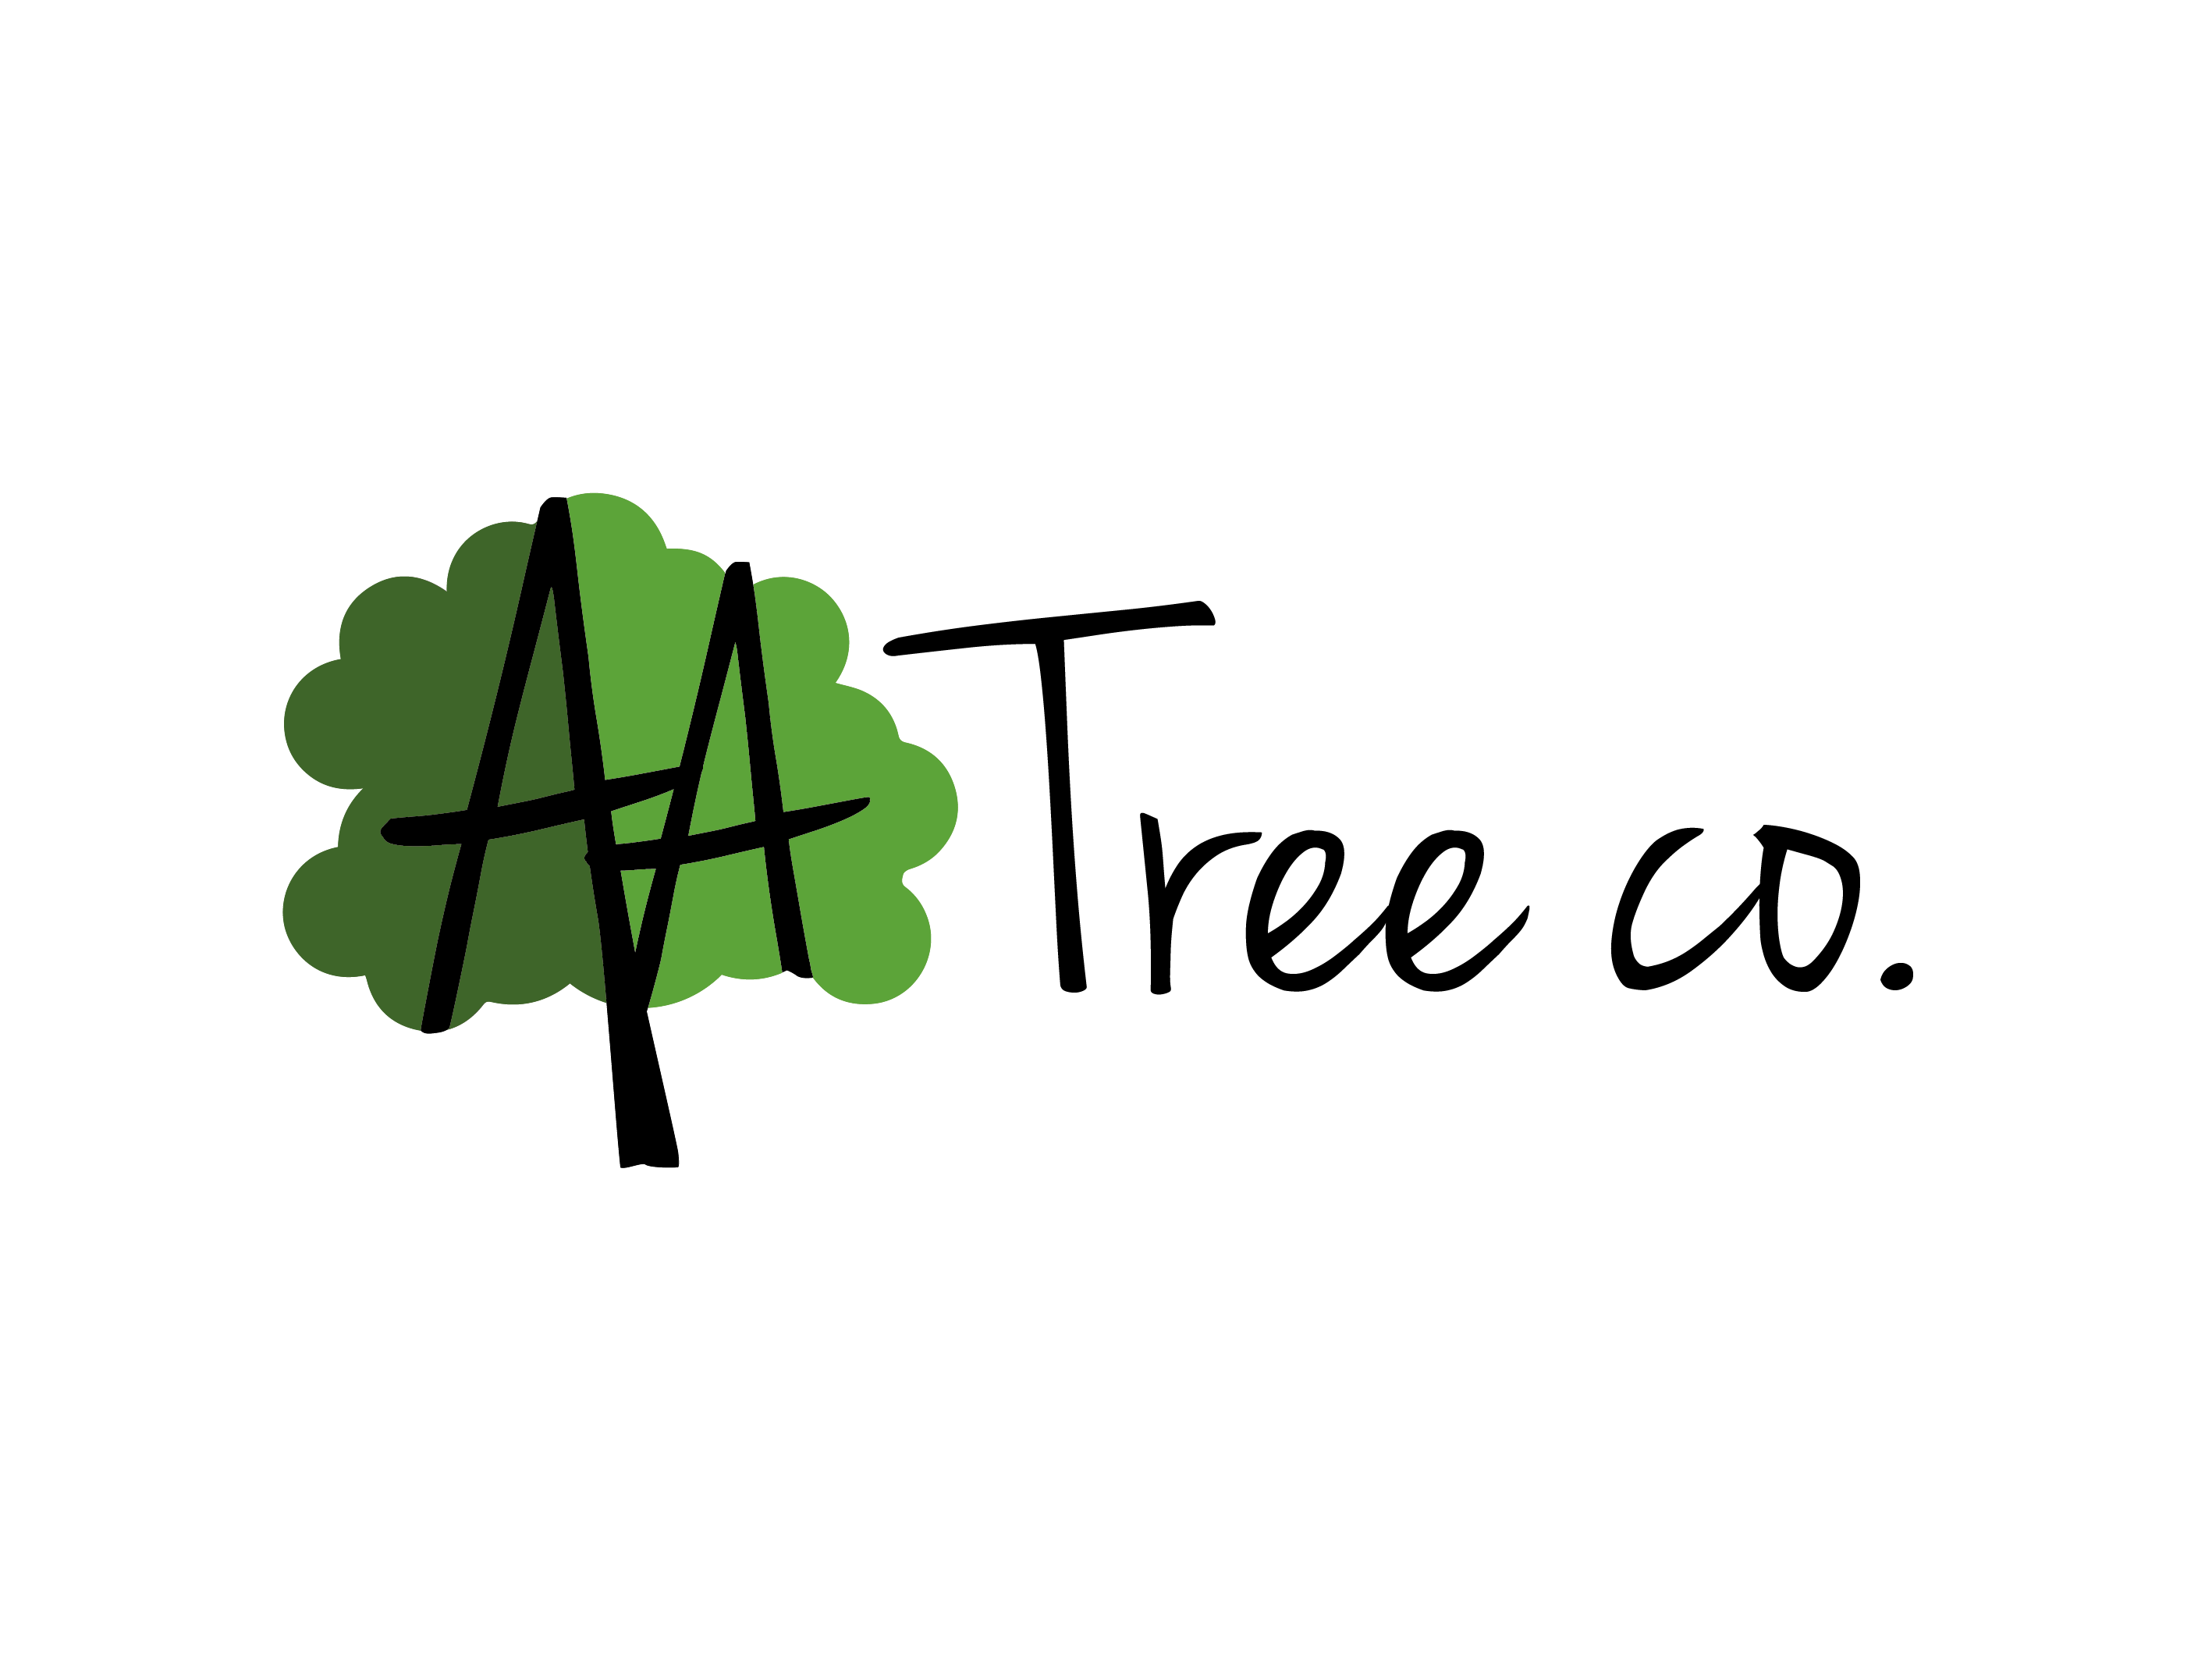 AA tree Co.